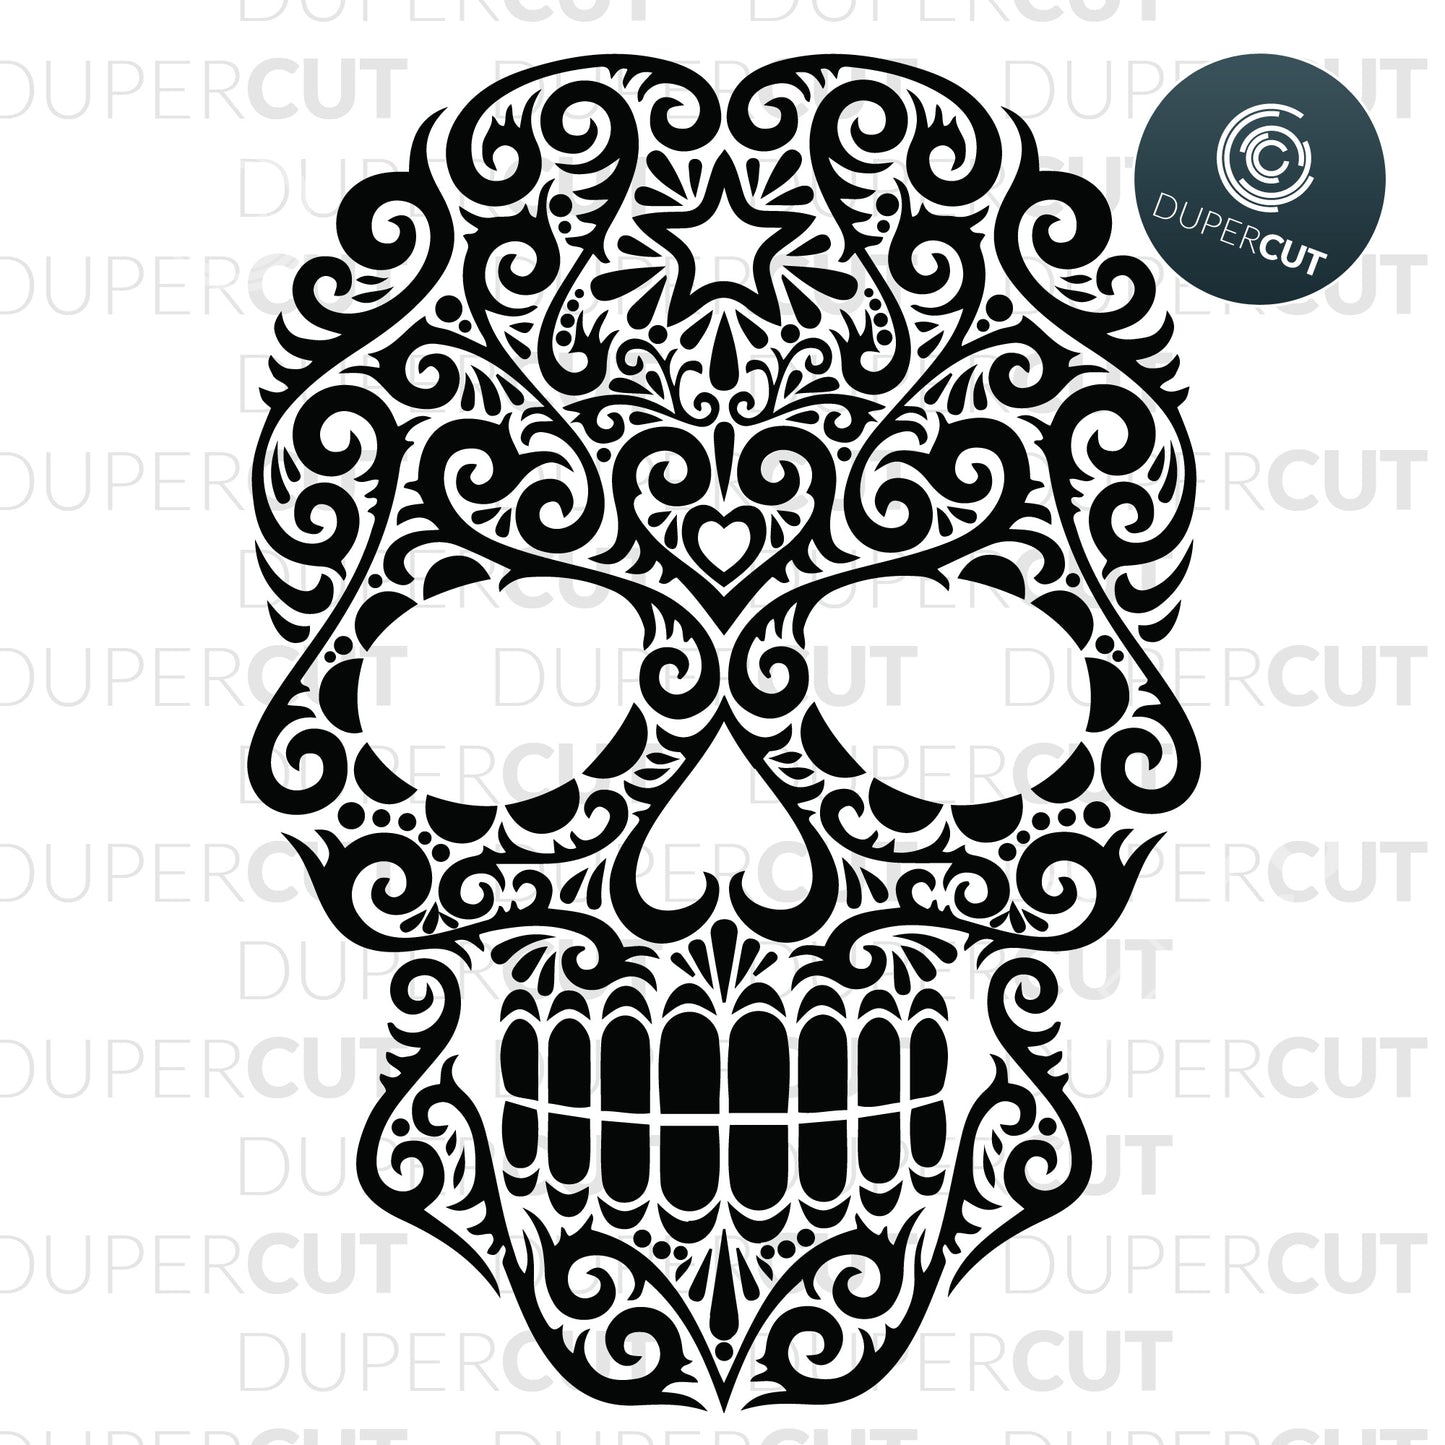 Sugar Skull swirl decorative design stencil. SVG PNG DXF cutting files for Cricut, Silhouette, Glowforge, print on demand, sublimation templates